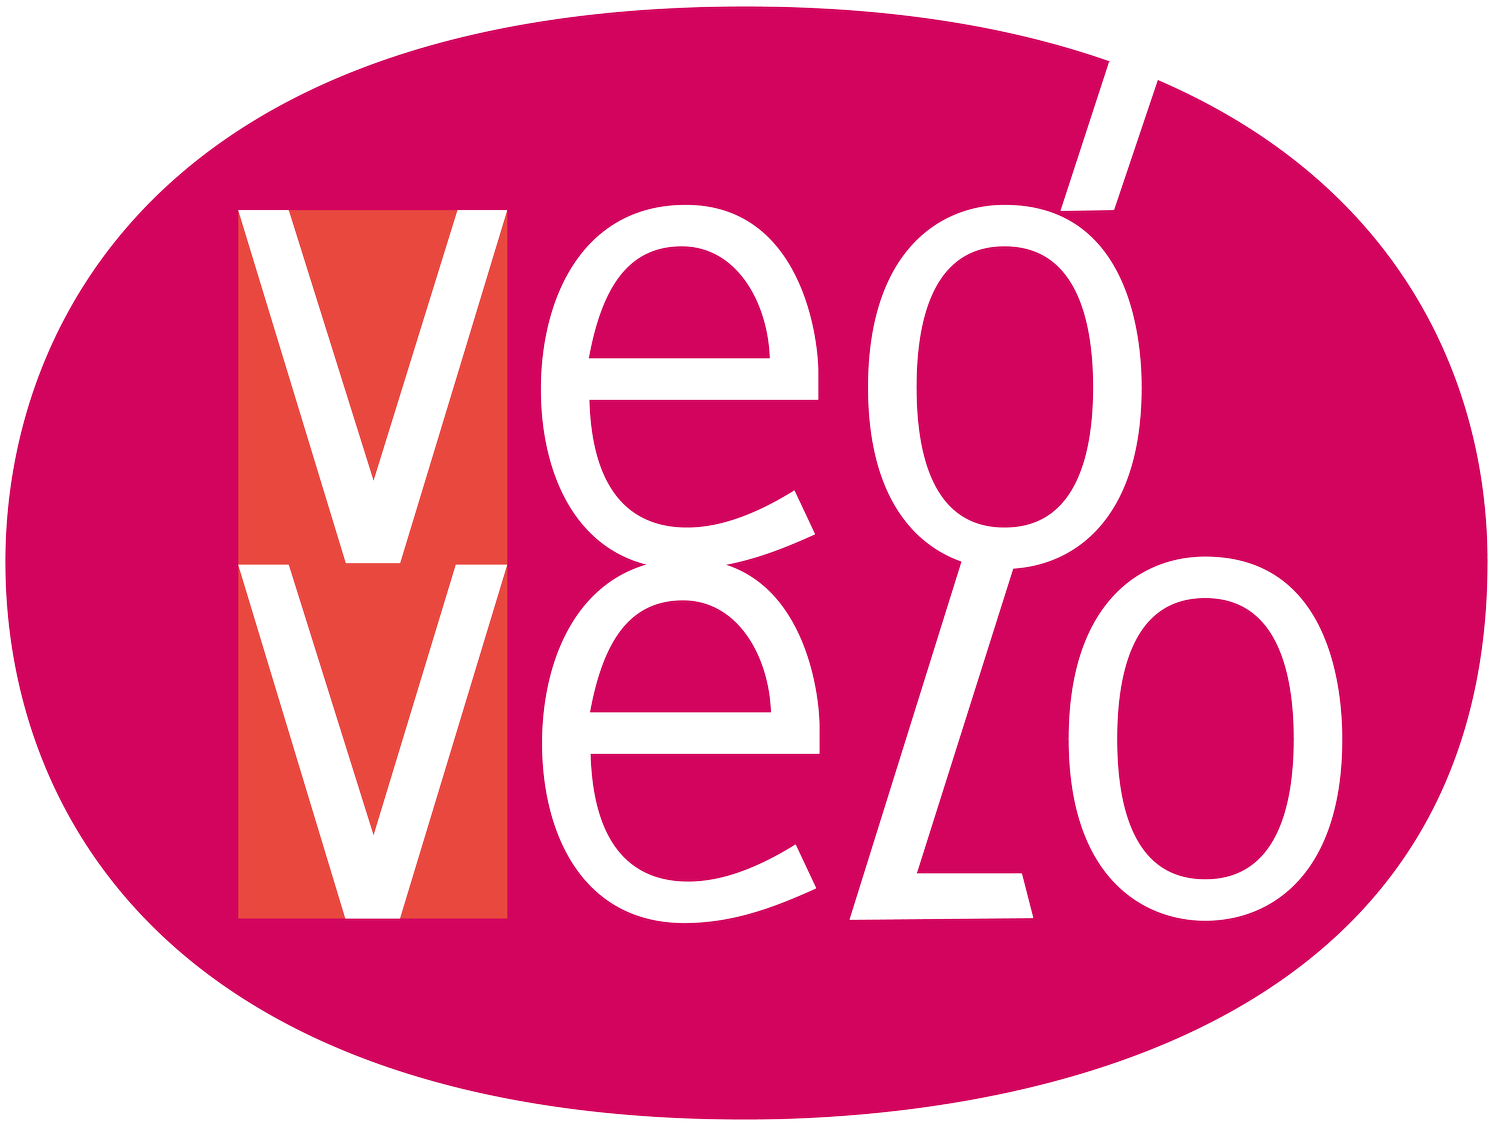 veo velo - the statement piece for cargo bikes